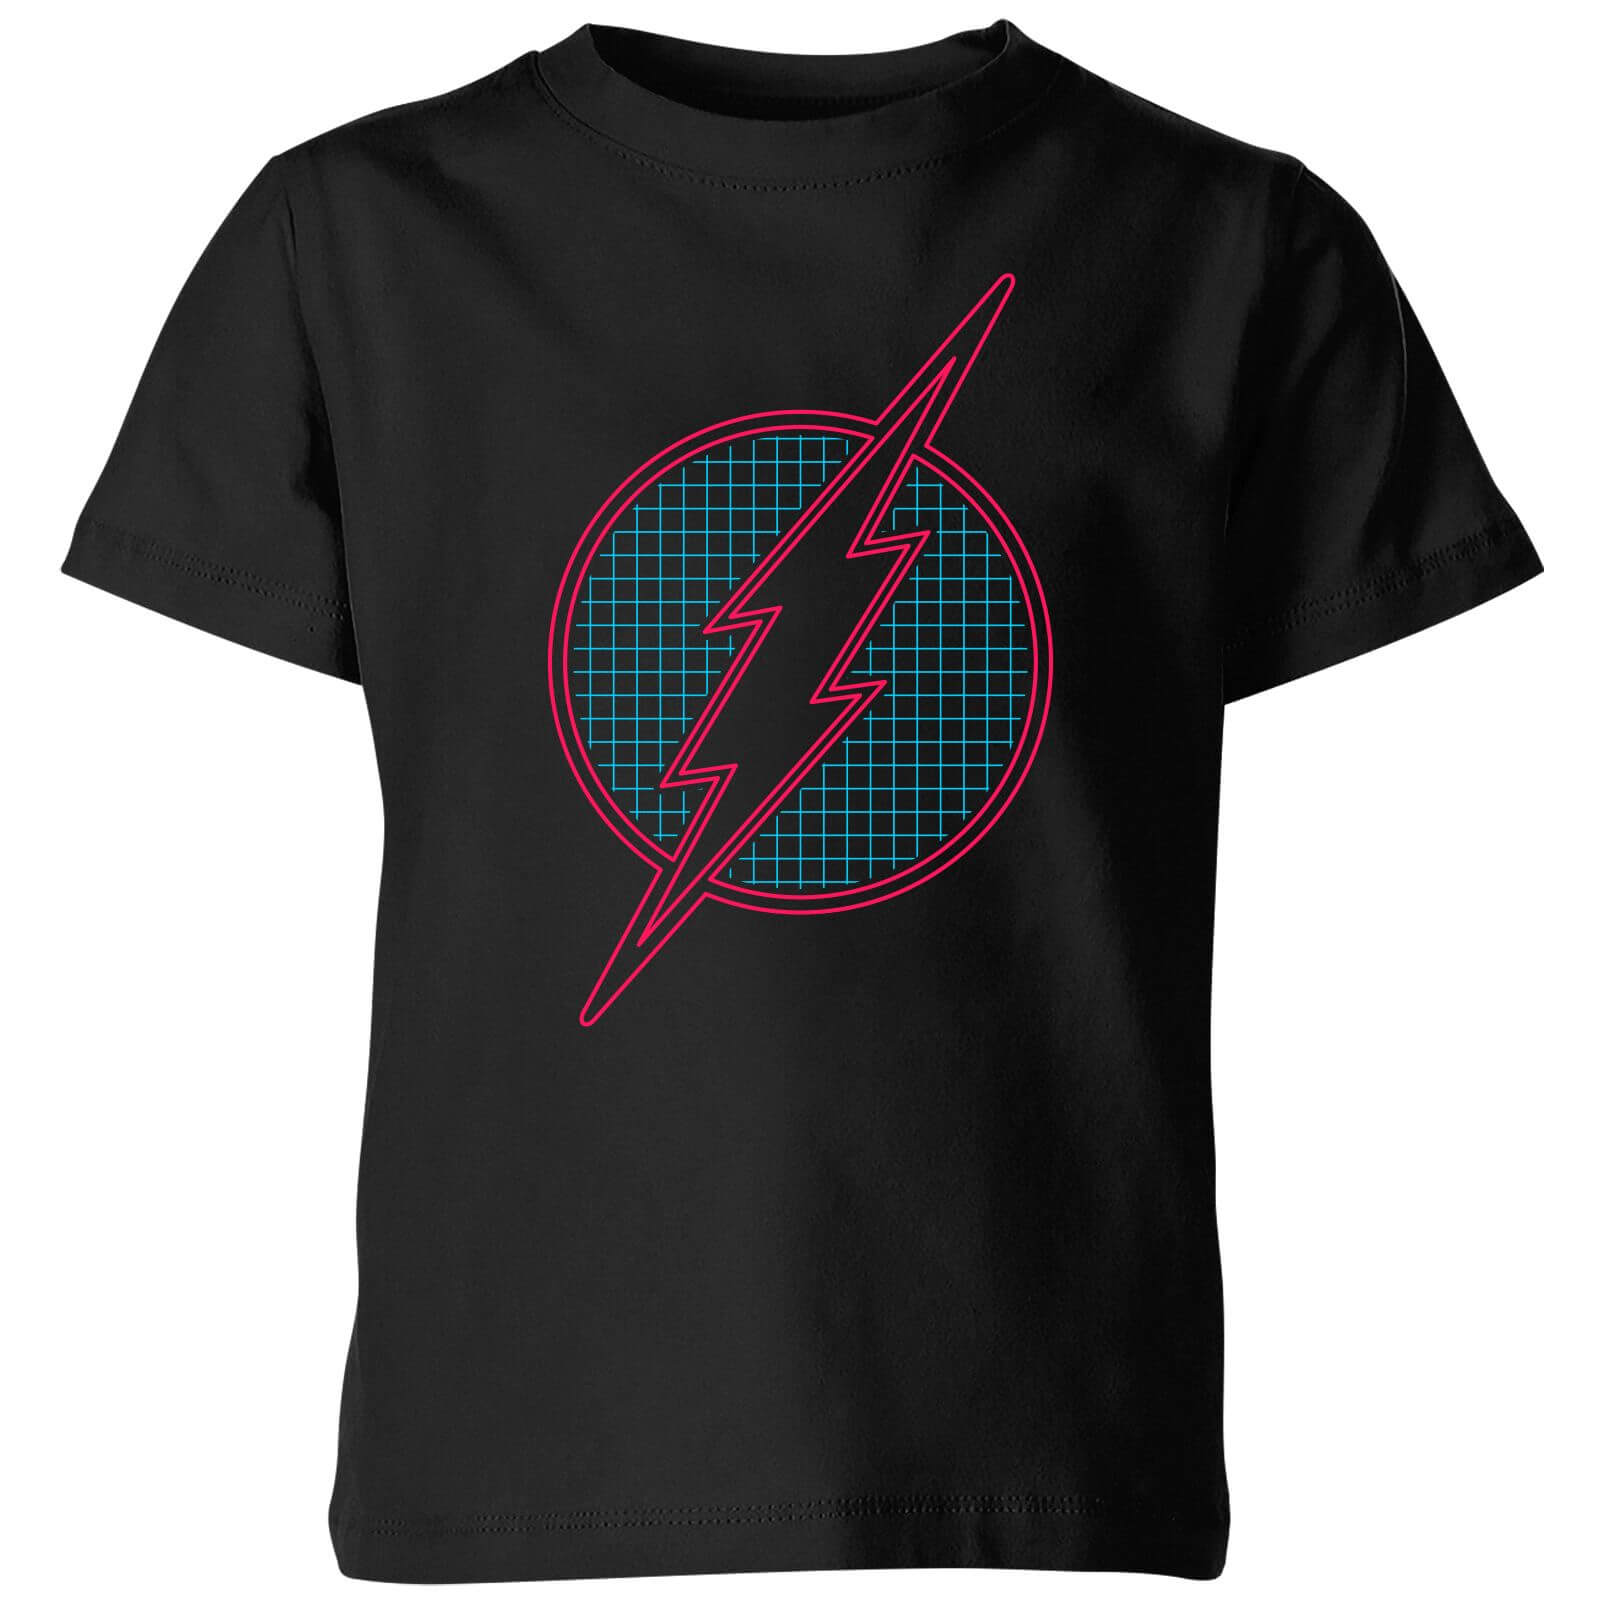 Justice League Flash Retro Grid Logo Kids' T-Shirt - Black - 7-8 Years